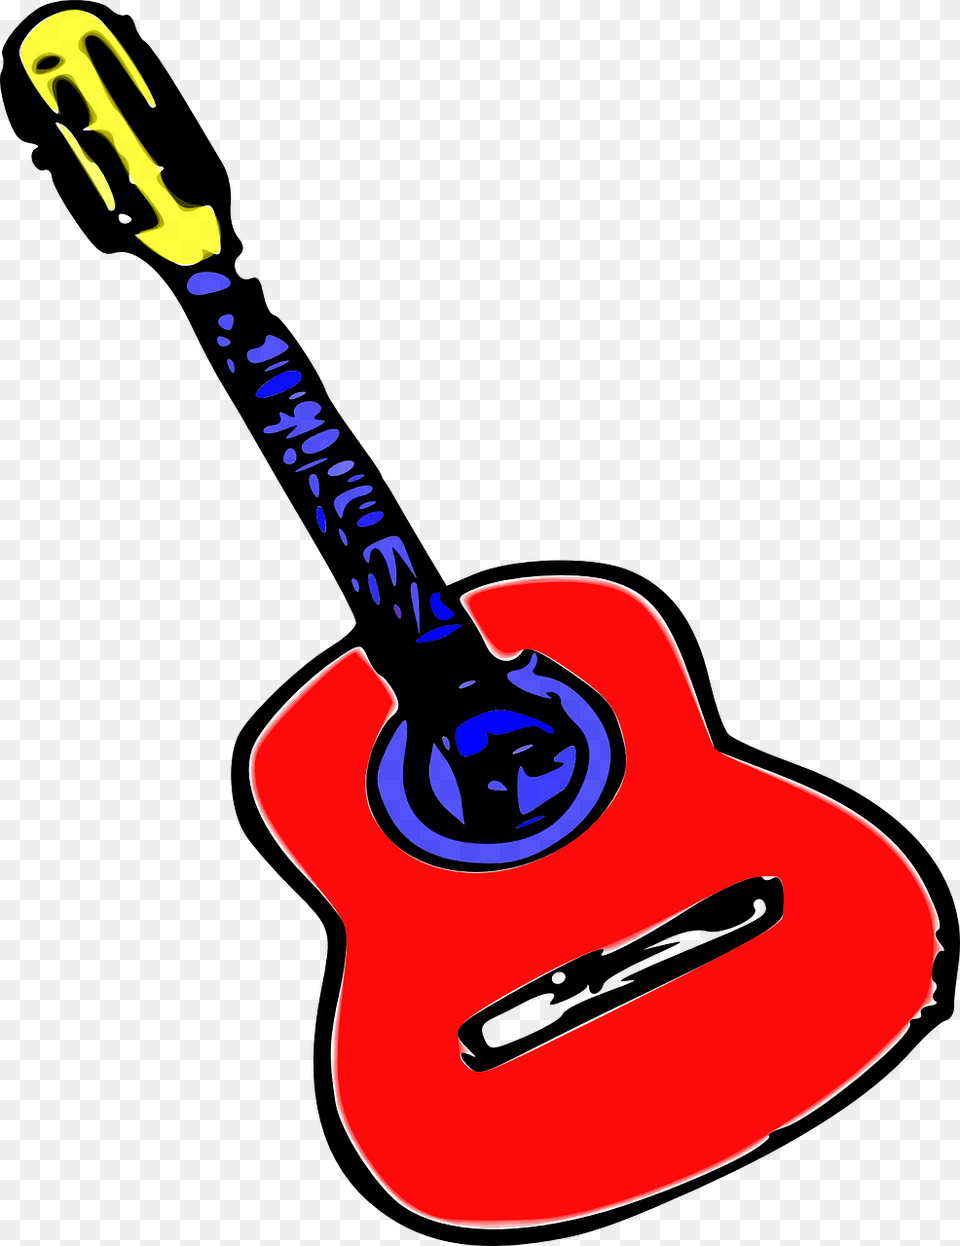 Acoustic Guitar Musical Instrument Guitar Free Picture Guitar, Musical Instrument, Smoke Pipe Png